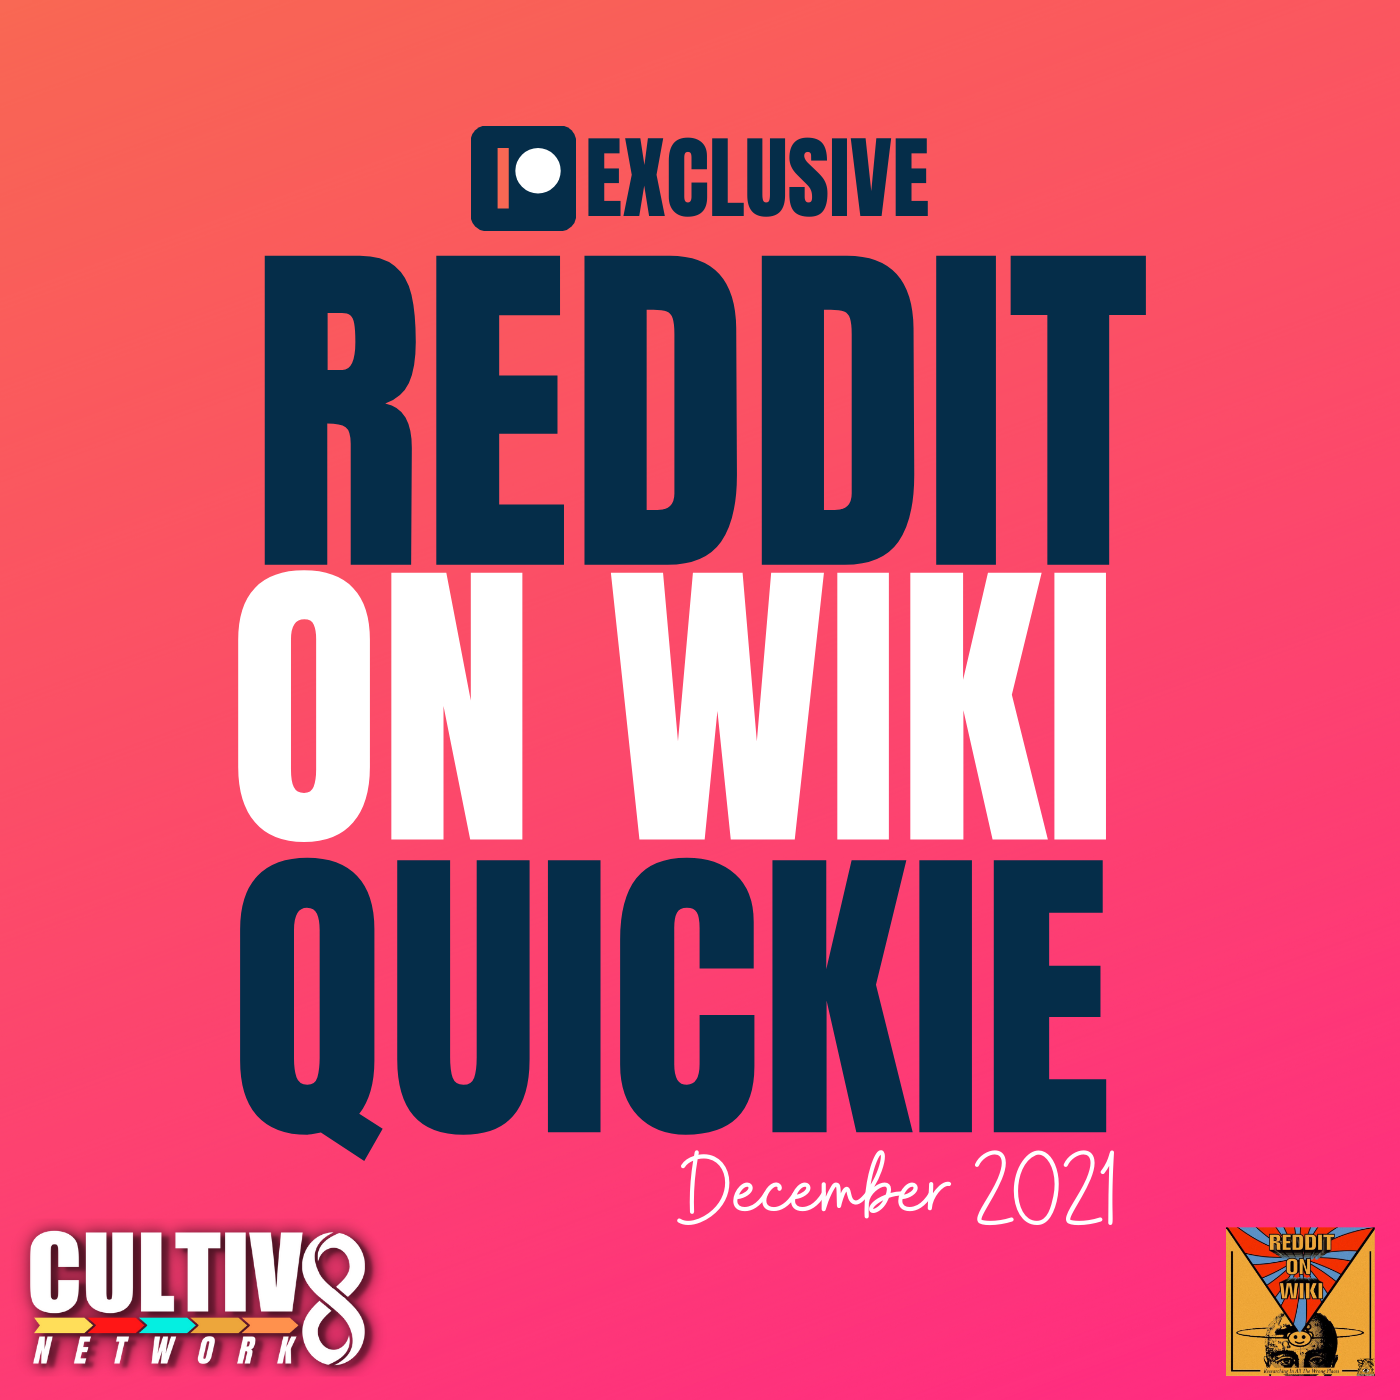 Reddit On Wiki Quickie - The QAnon Shaman